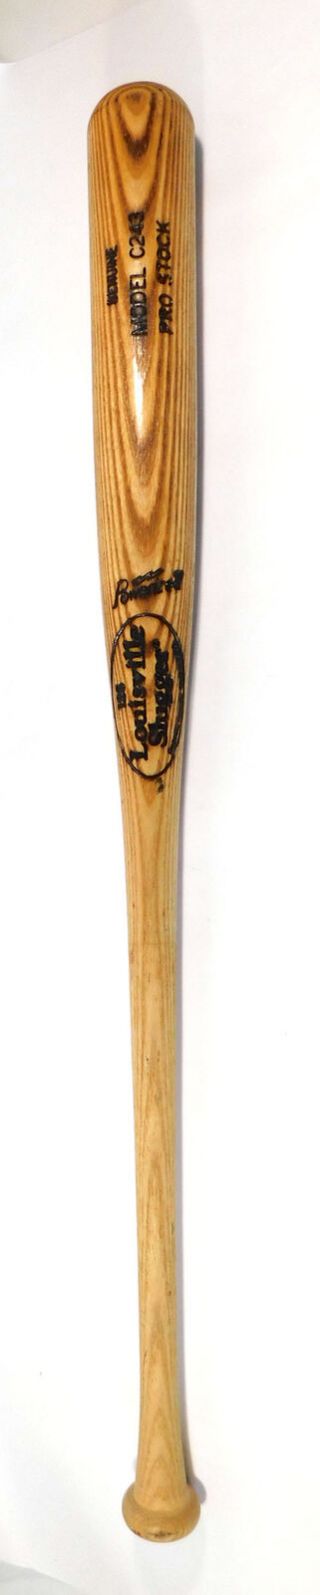 1983 - 1997 Louisville Slugger Model C243 Pro Stock Wood Bat